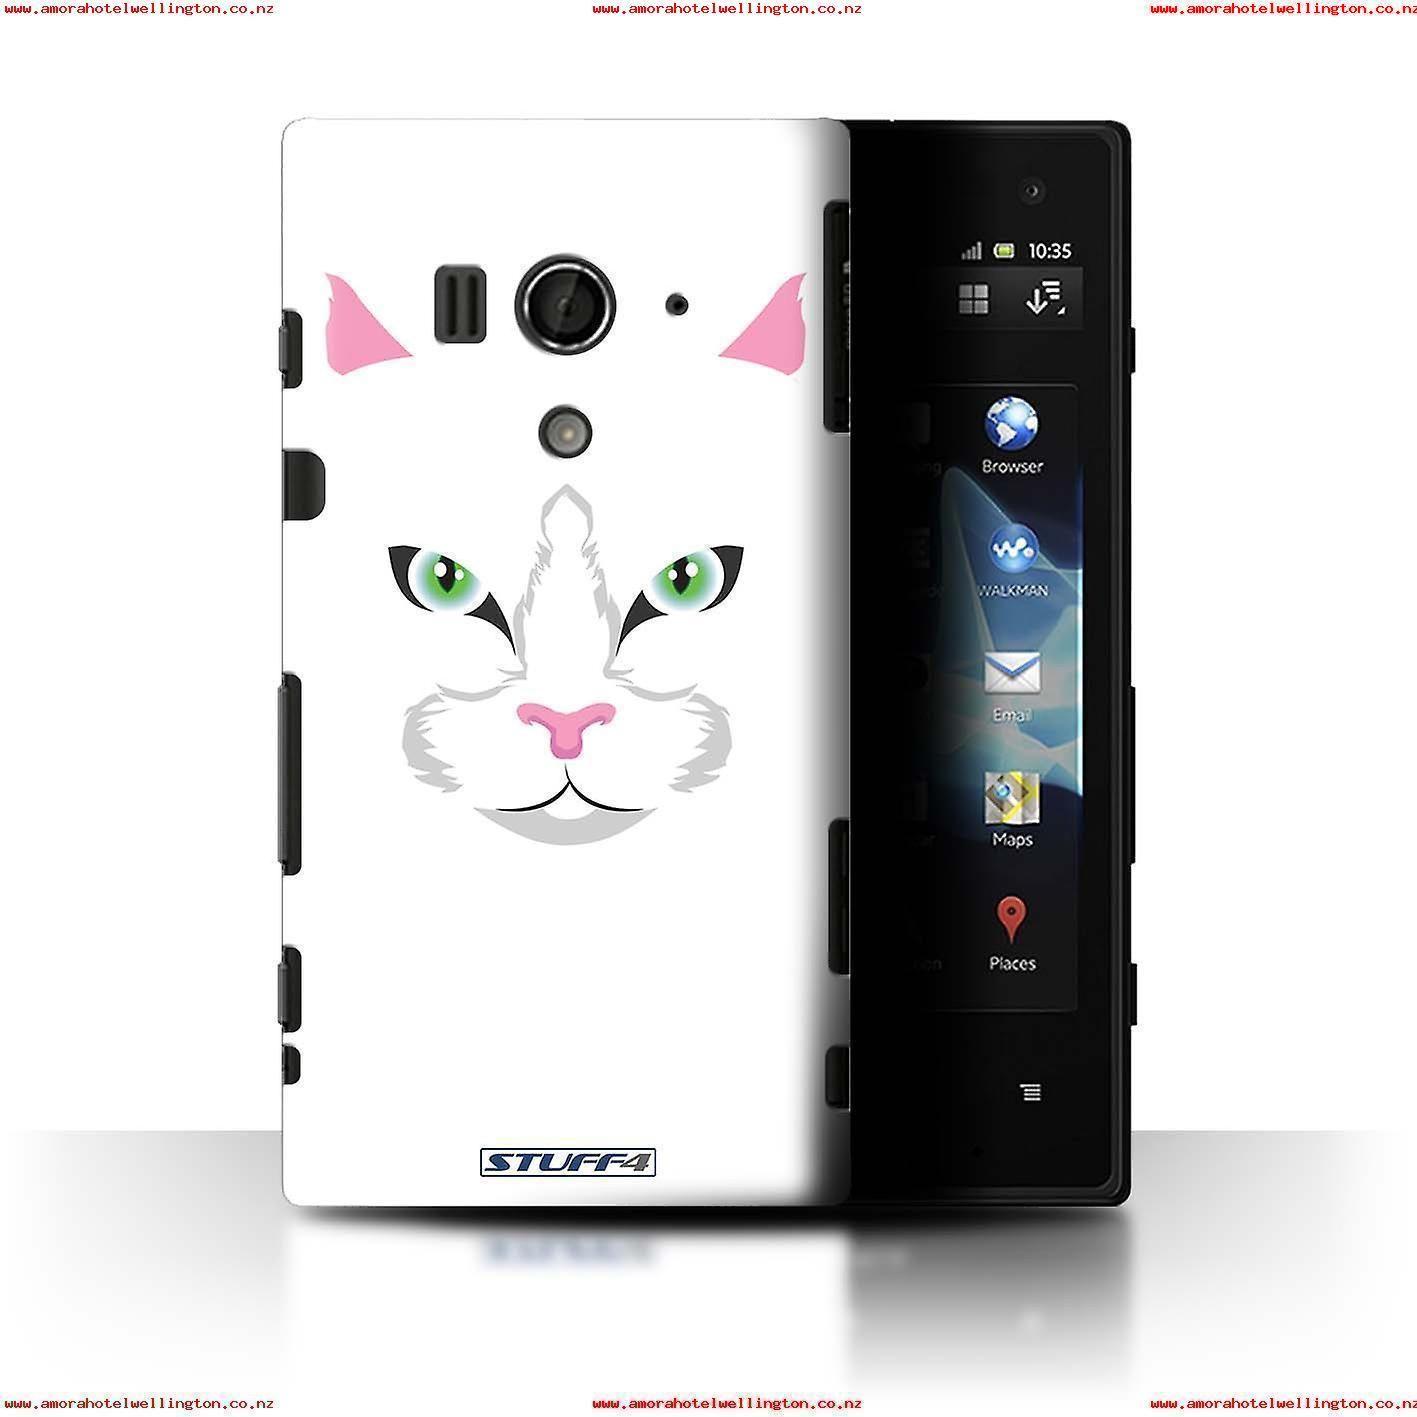 White Cat Case Logo - STUFF4 Case/Cover for Sony Xperia Acro S/LT26w/White Cat/Animal ...